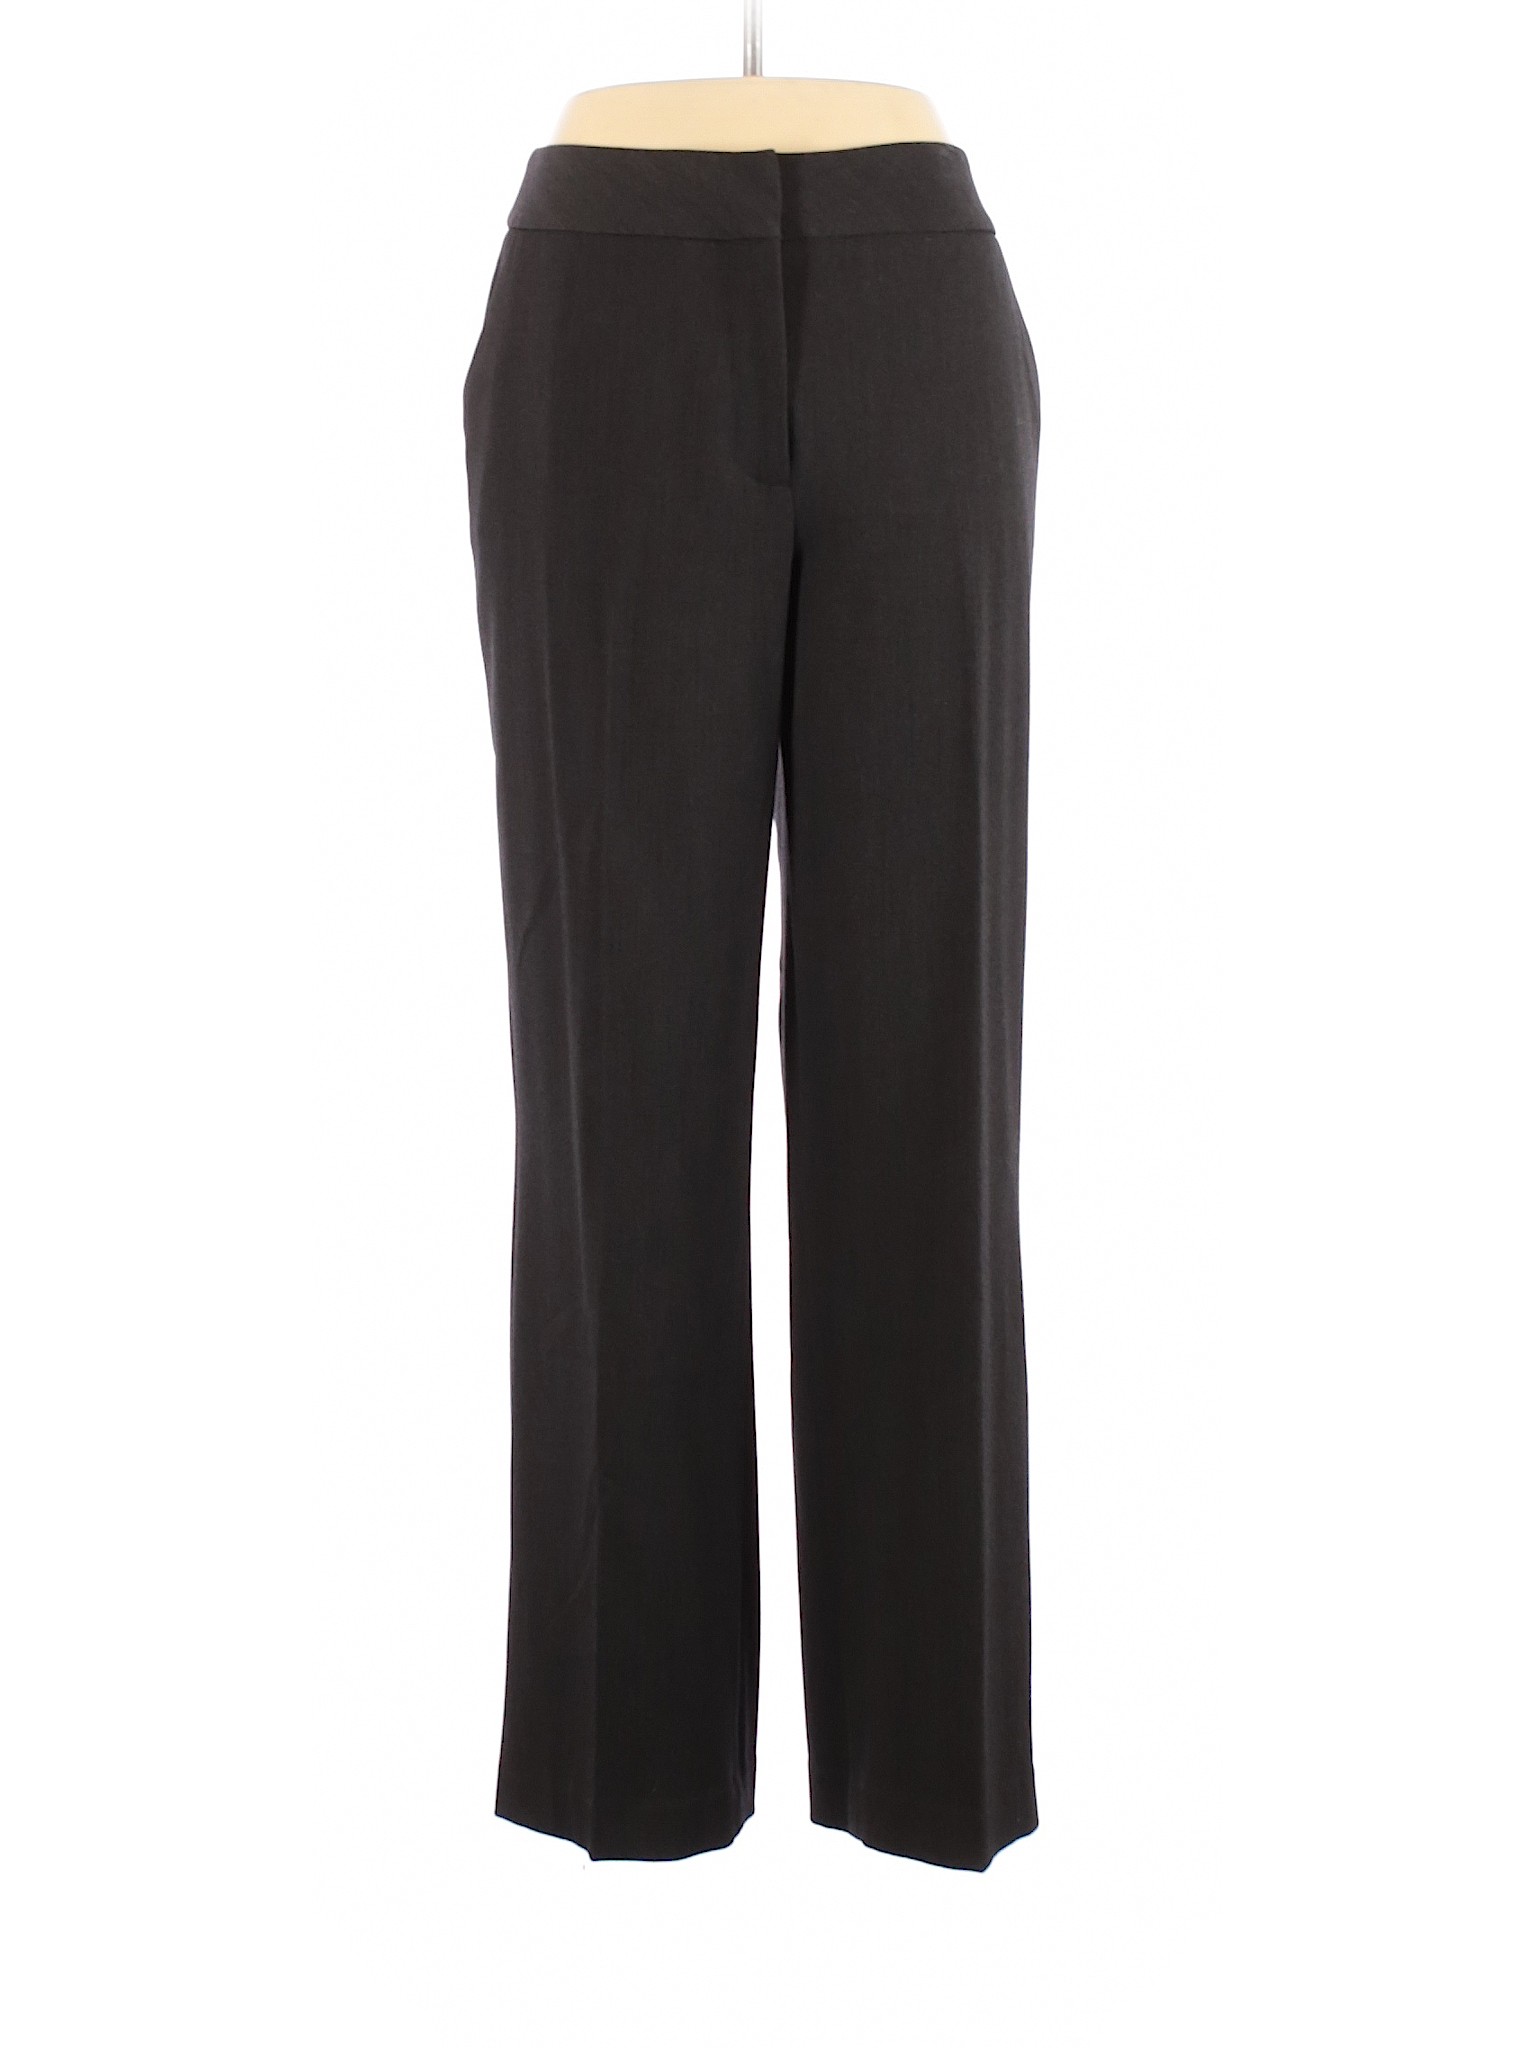 Investments Women Black Dress Pants 10 | eBay